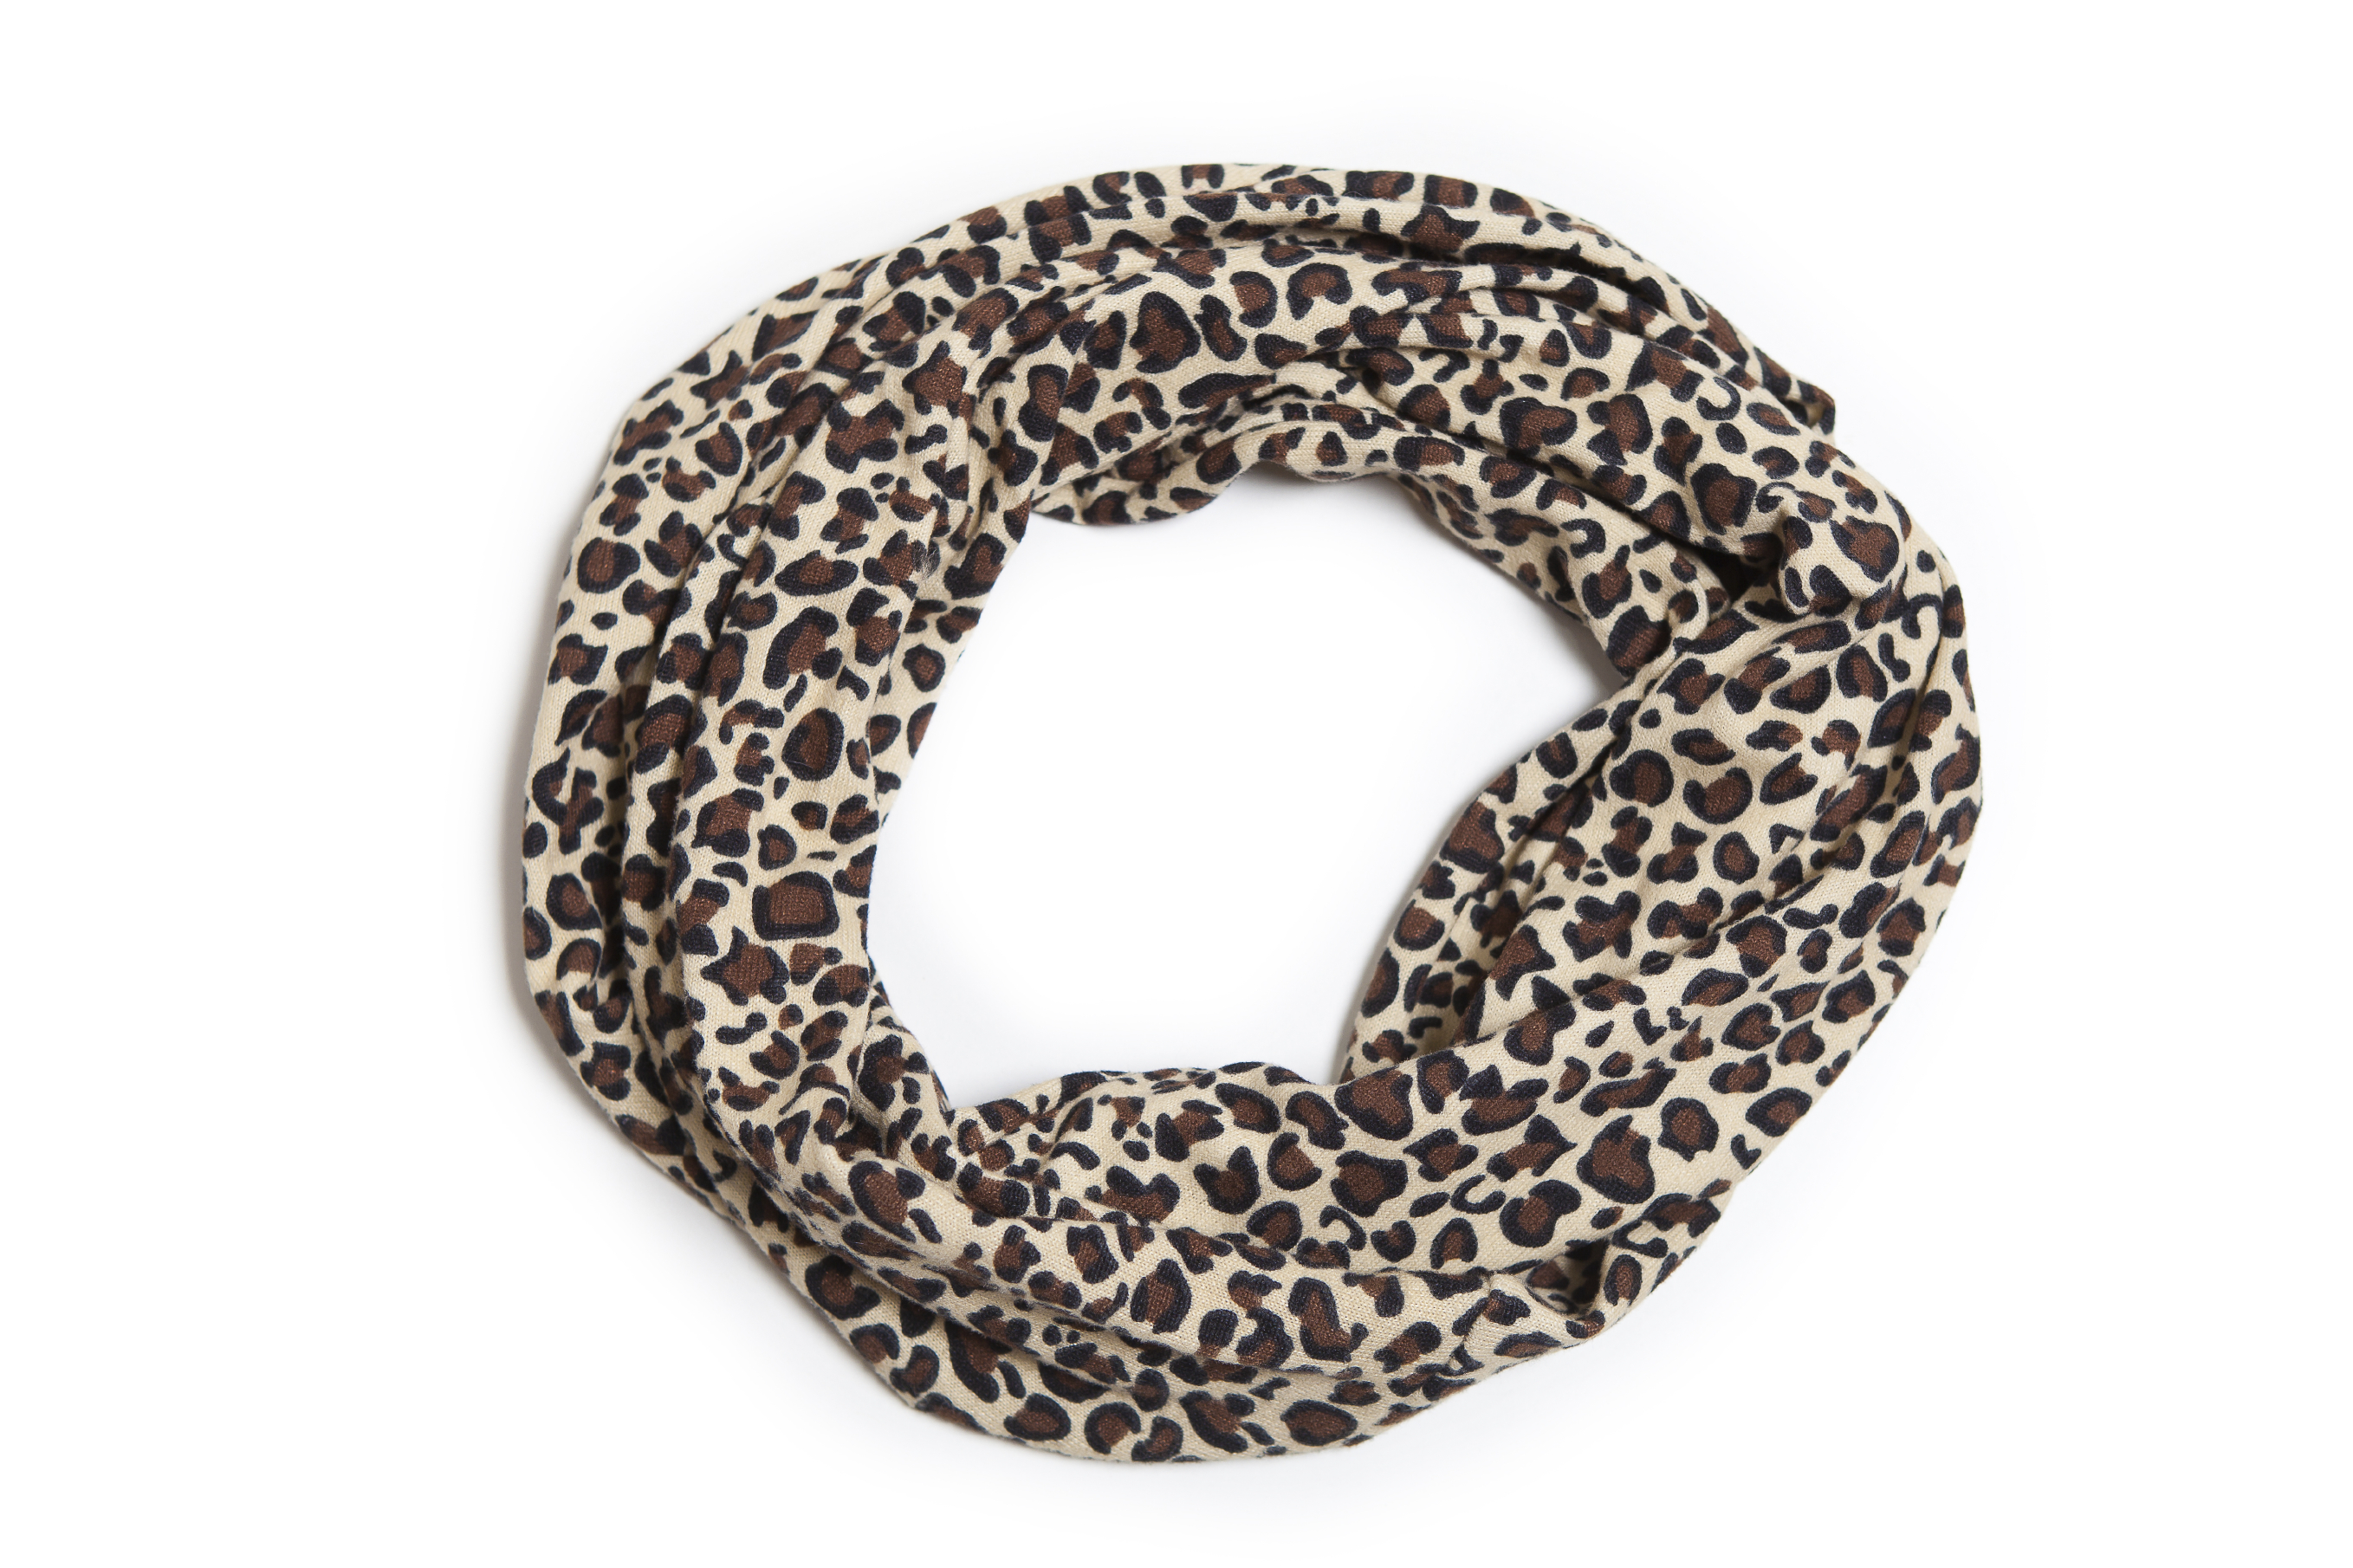 8 Stylish Ways to Wear a Leopard Scarf